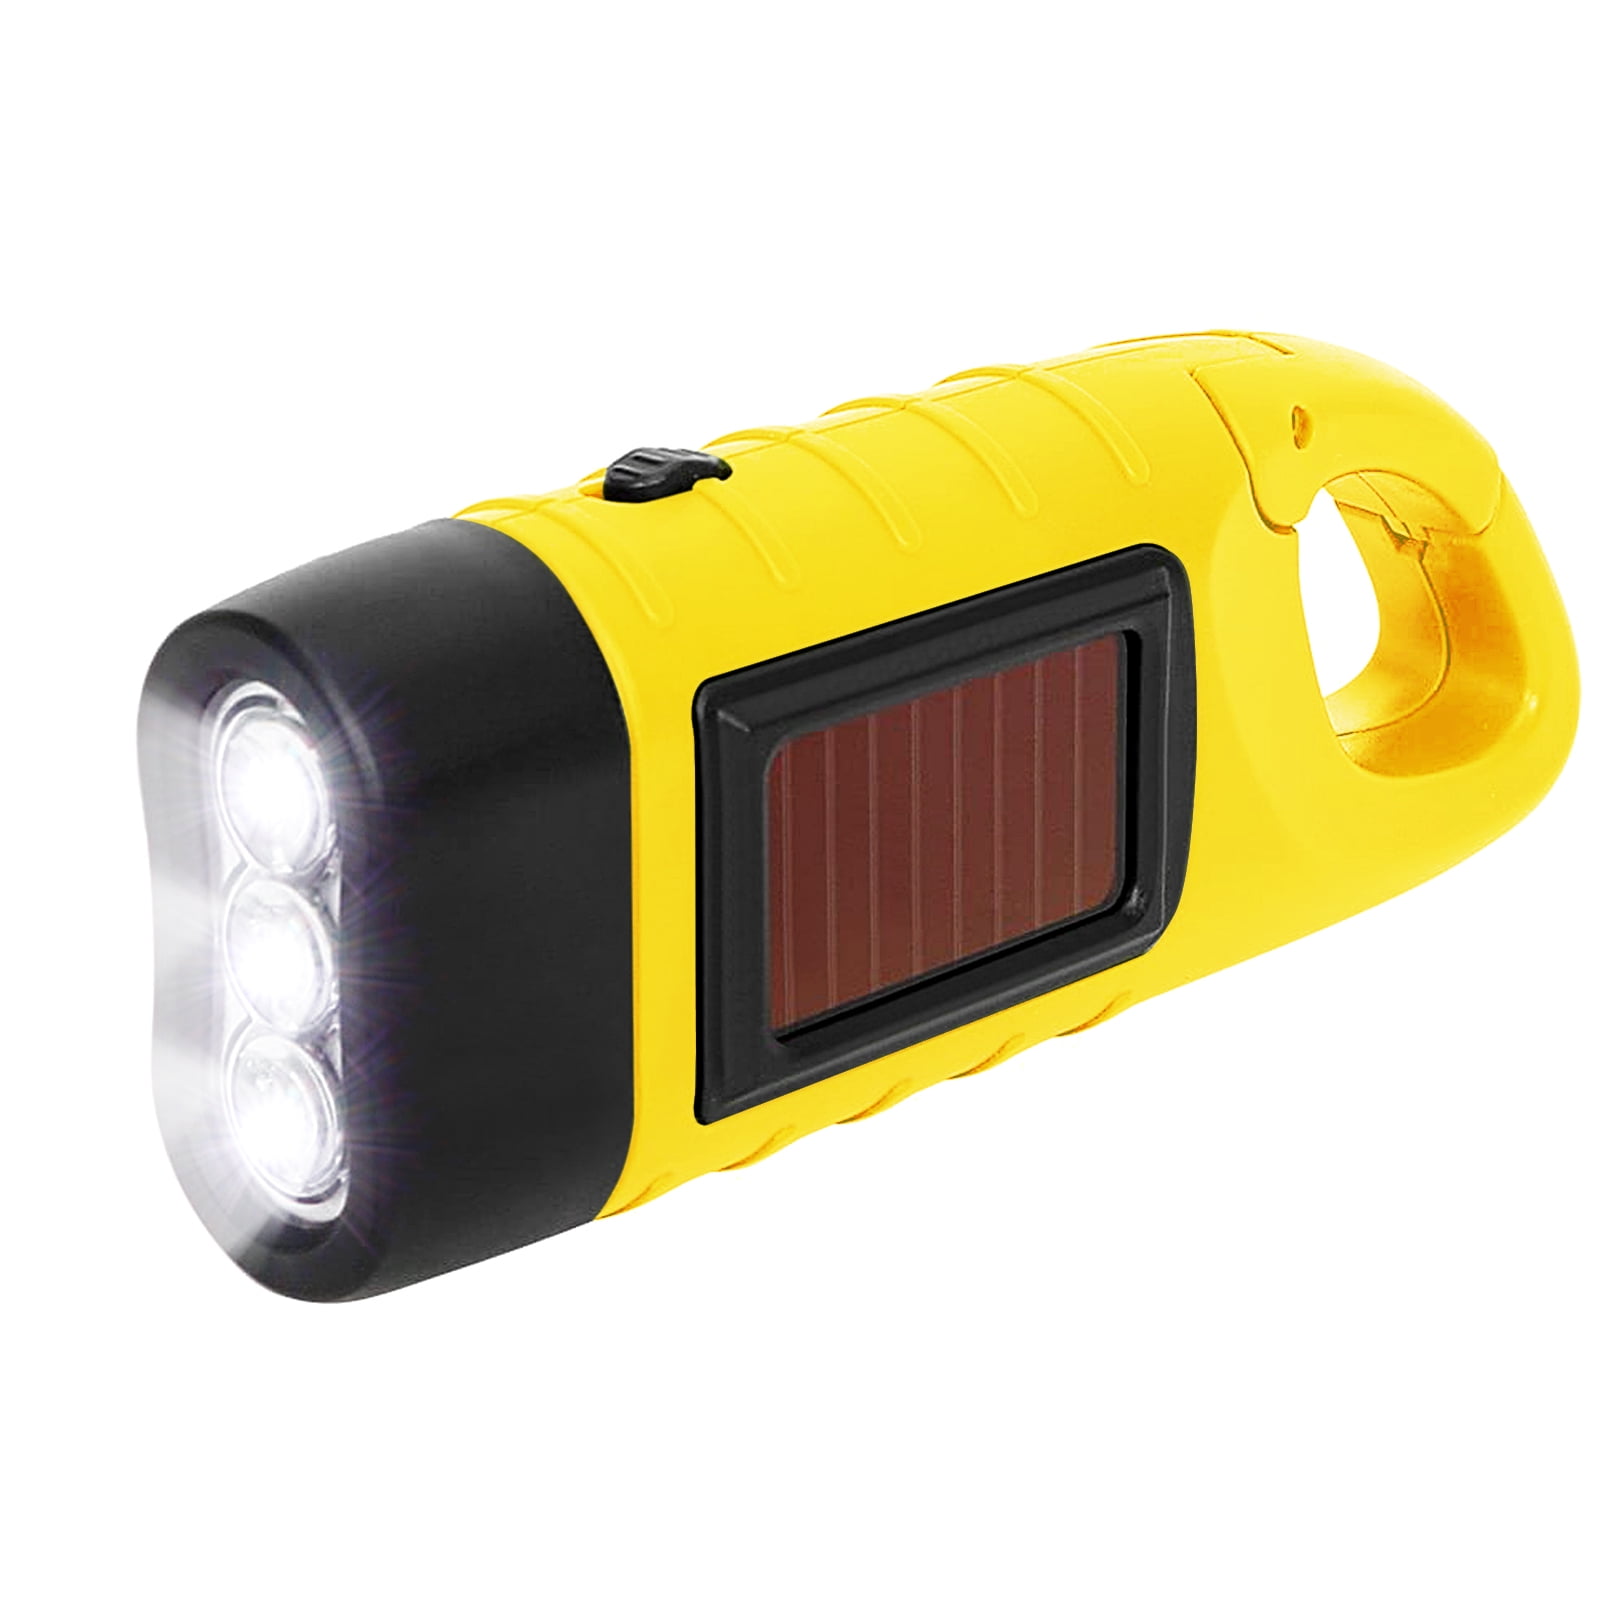 Secur Dynamo 8 Lumen Solar Waterproof LED Rechargeable Flashlight Yellow 